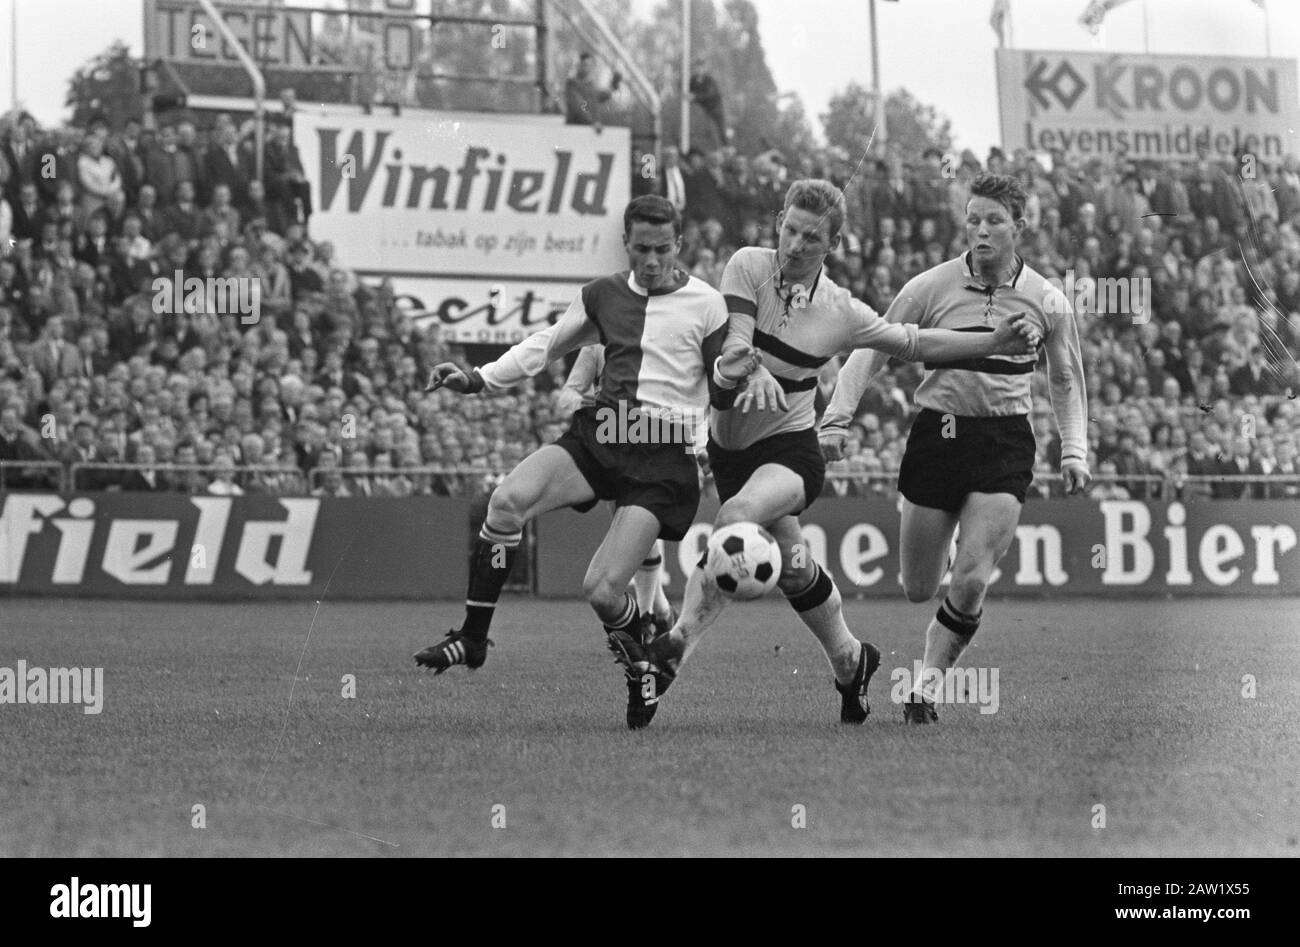 Football DOS - Feyenoord Utrecht: 0-5 ove kindvall (Feyenoord) vies with  DOS players Veenstra (center) and de Weerd (right) Date: October 16, 1966  Location : Utrecht (prov), Utrecht (city) Keywords: sports, bleachers,